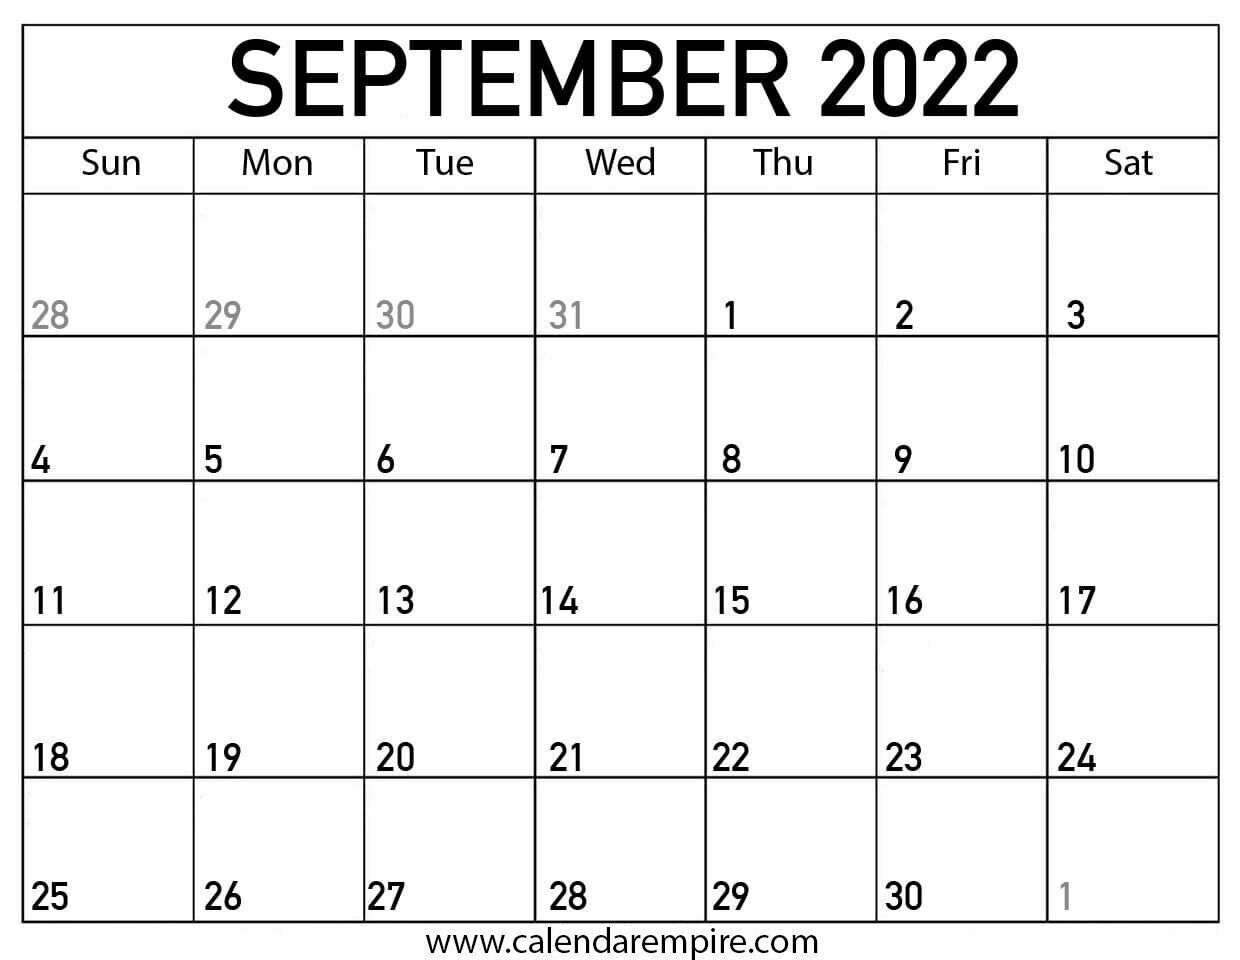 Avatar: September 2022 Calendar